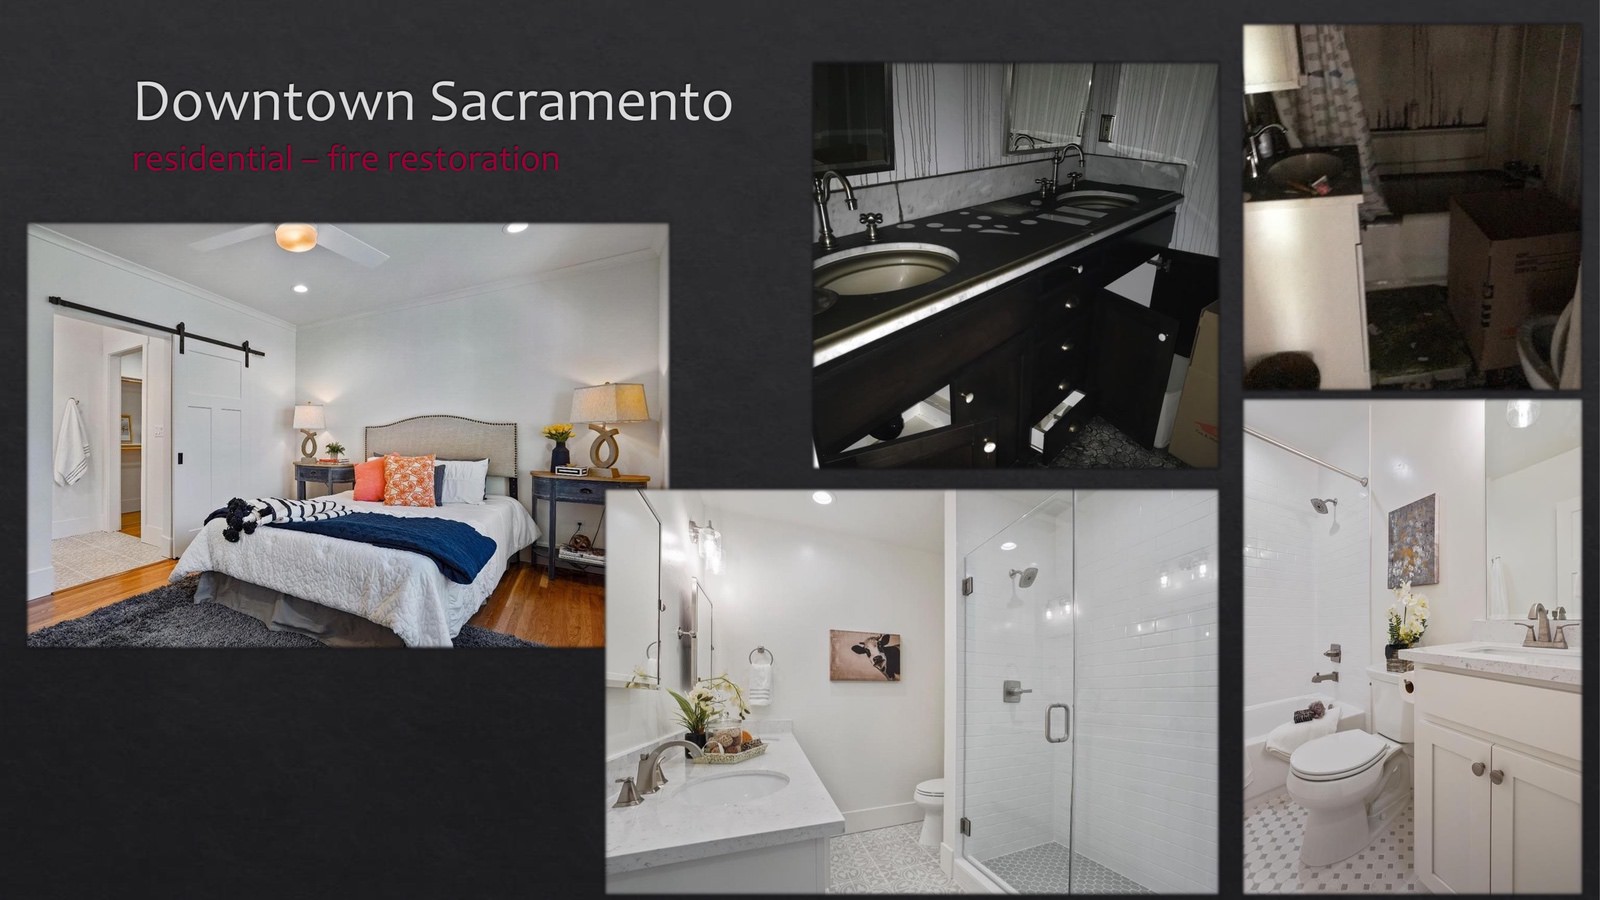 Downtown Sacramento Residential fire restoration - bathroom and bedroom - lightbox